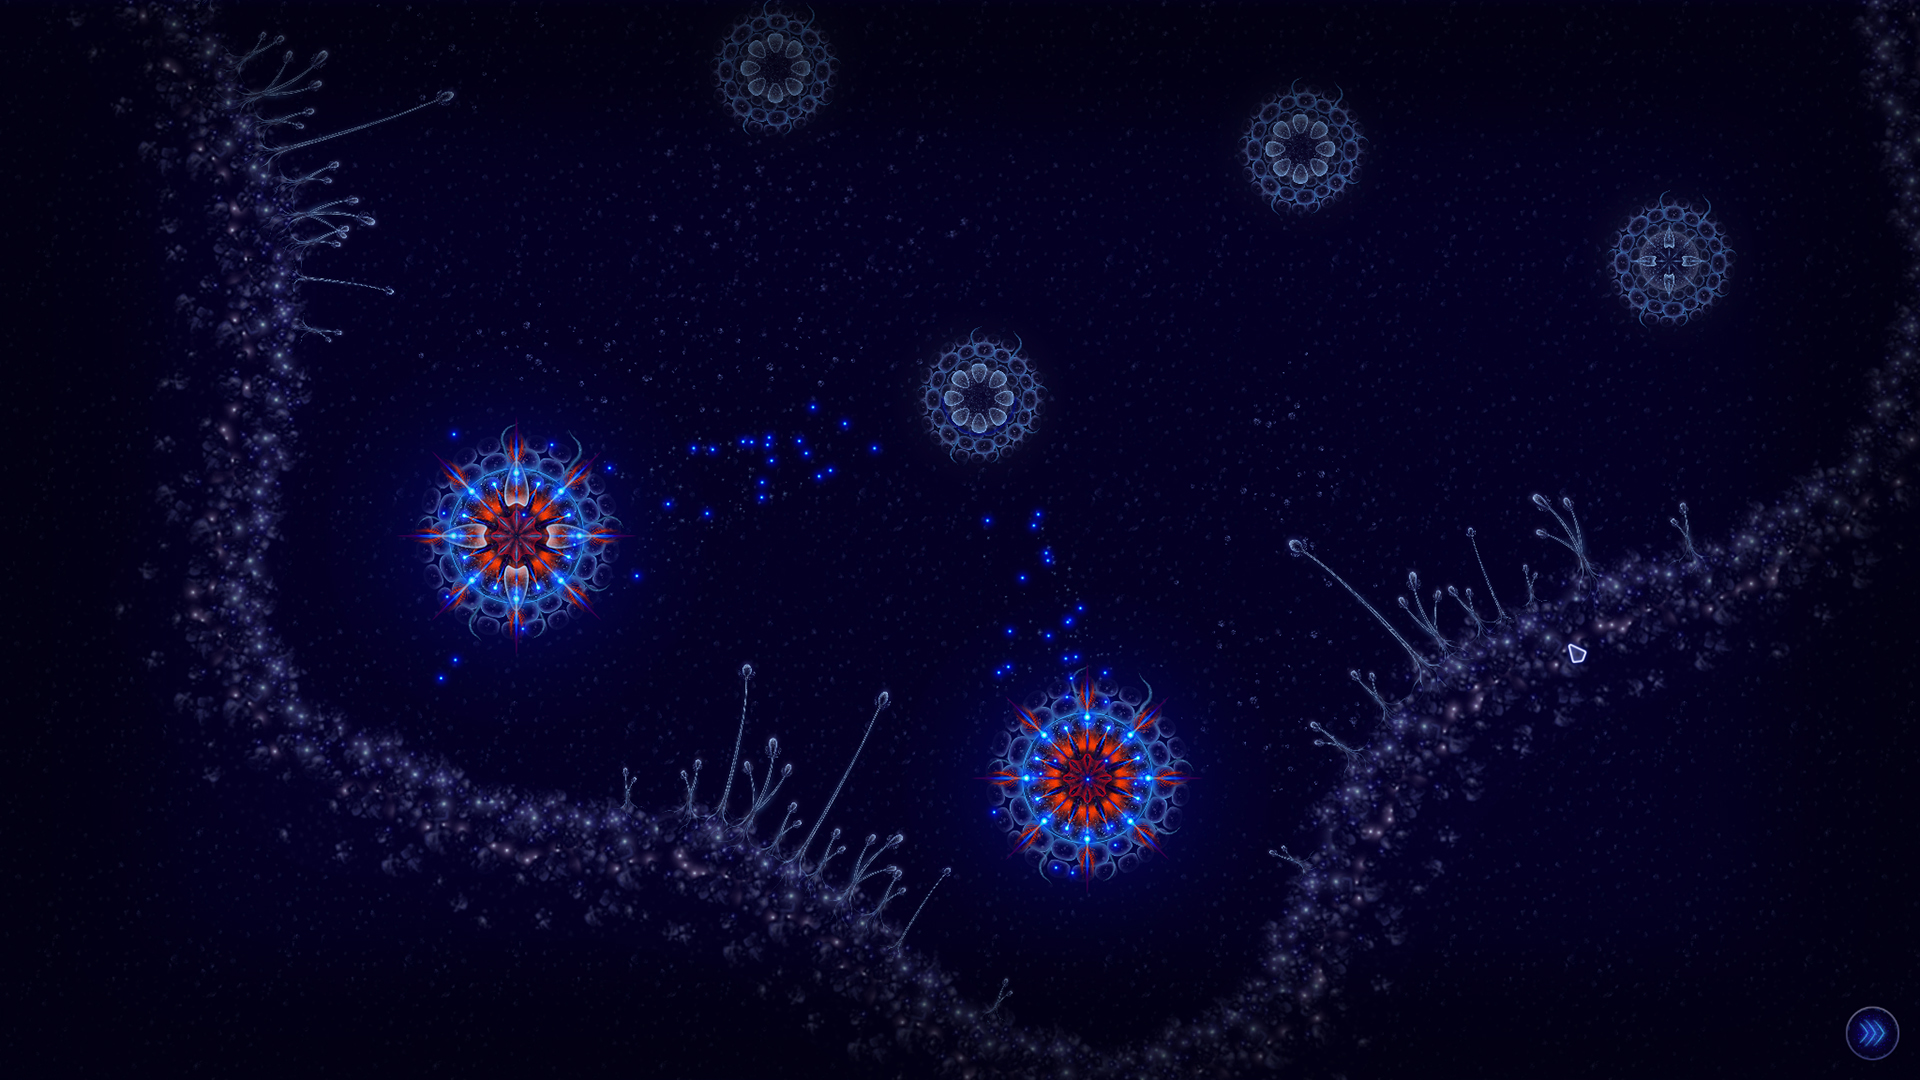 Microcosmum: survival of cells - Campaign "Mutations" screenshot